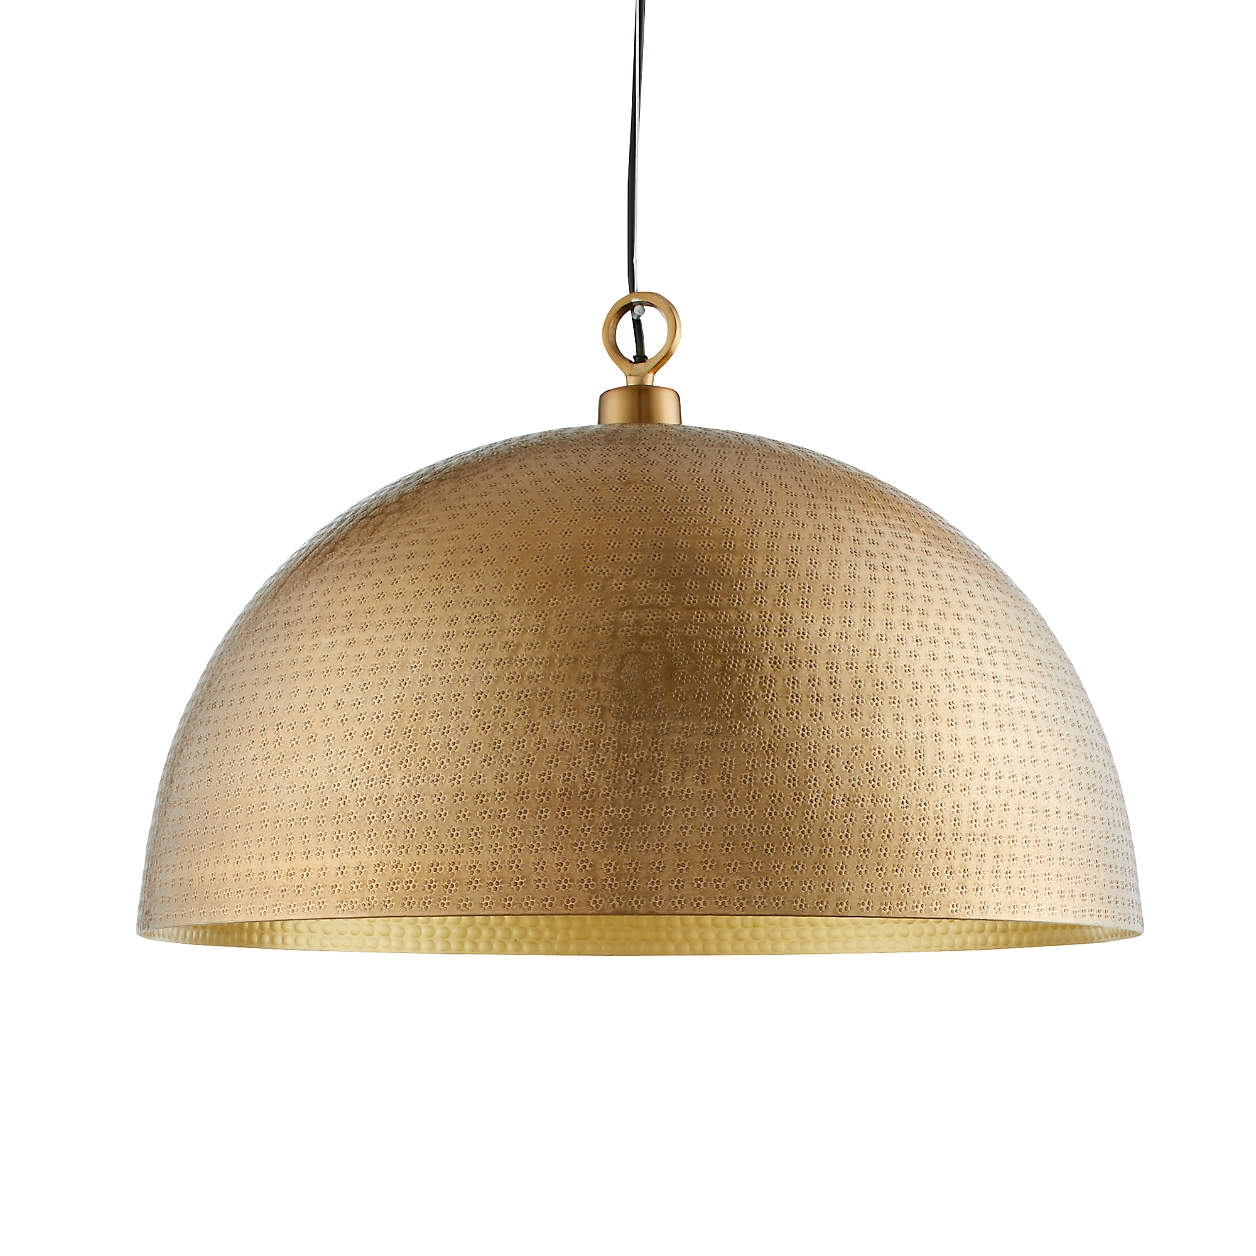 Rodan Metal Dome Pendant Light, Hammered Brass - Image 0